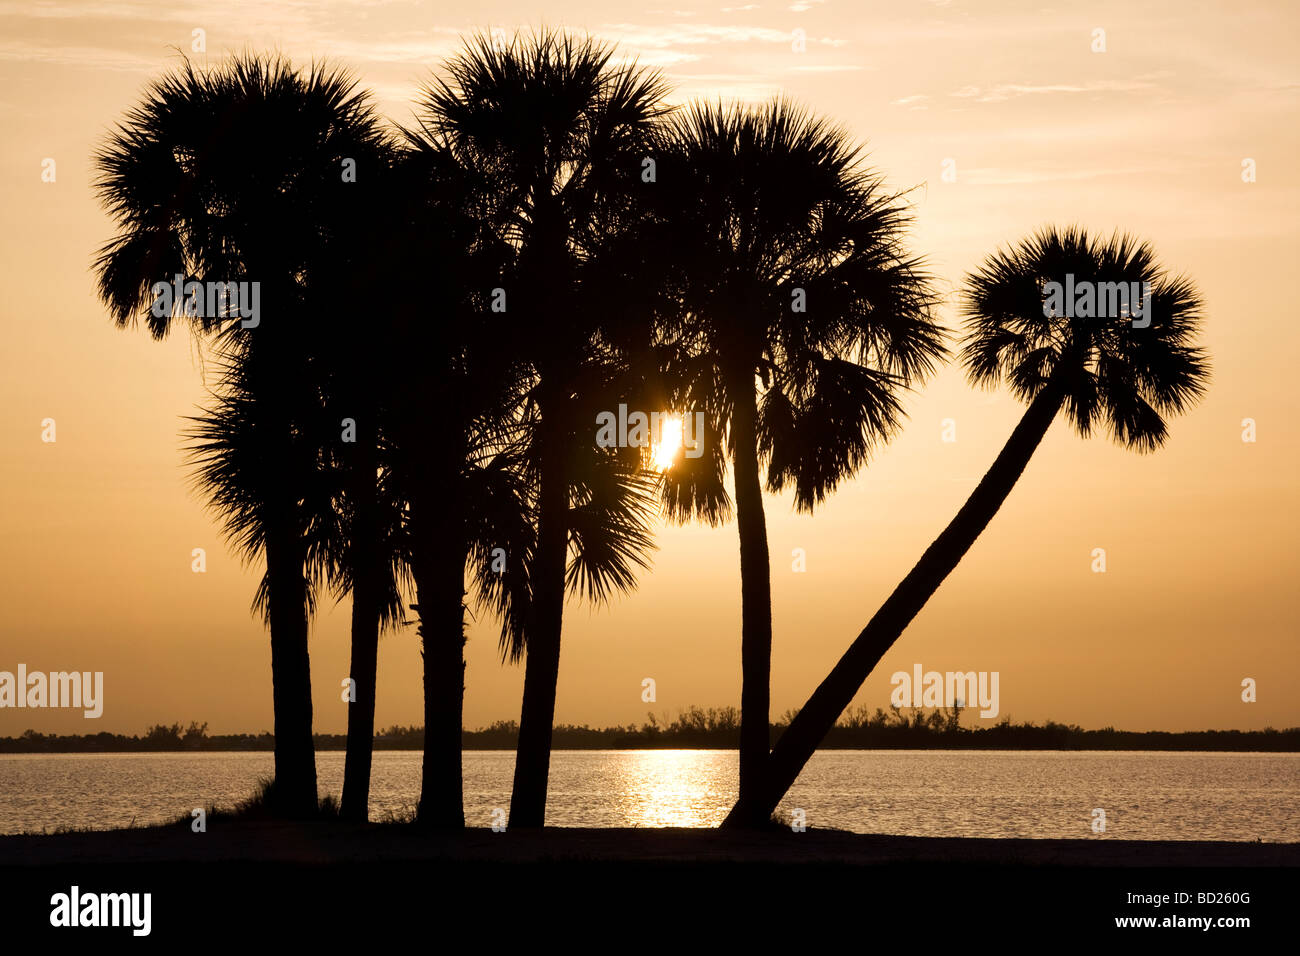 Palmen im Sonnenuntergang - Insel Sanibel Causeway - Sanibel Island, Florida Stockfoto